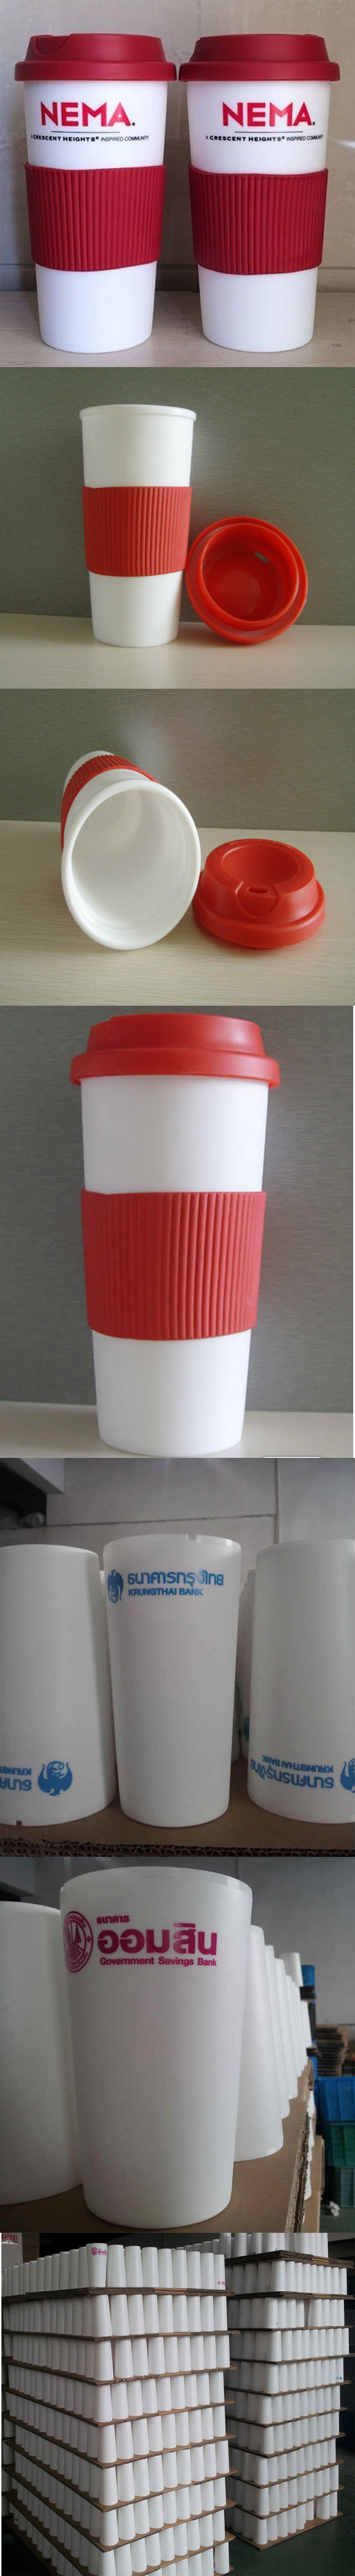 Disposable Plastic Coffee Cup Set, Plastic Coffee Cup with Silicon Lid, Plastic Coffee Cups with Handles